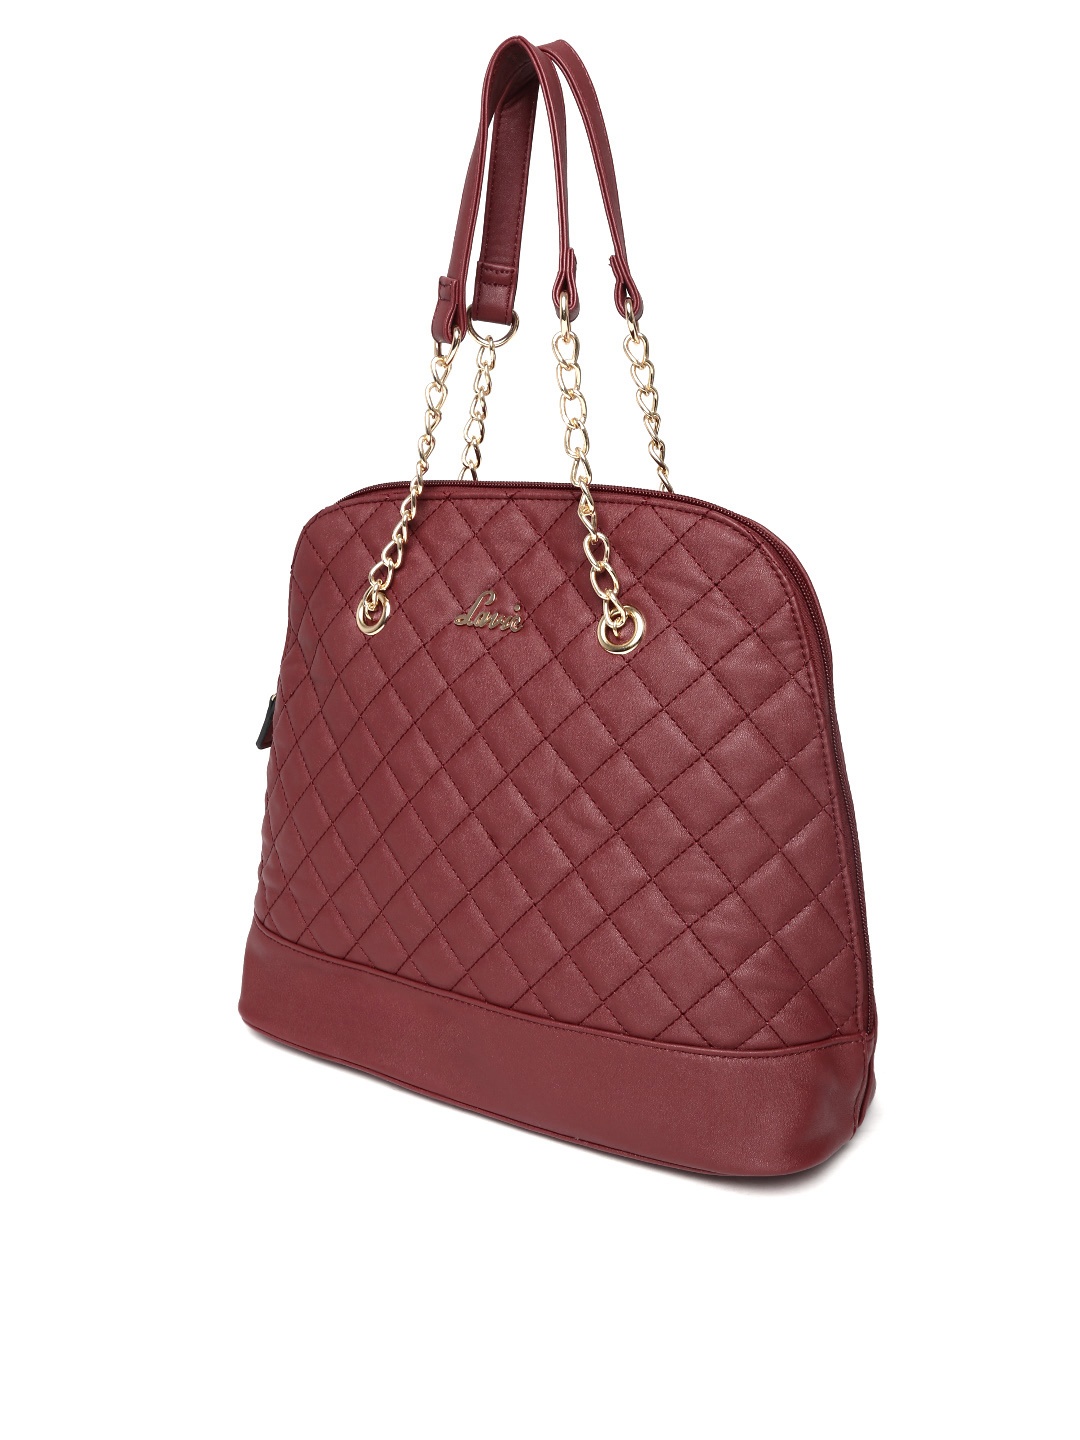 Myntra Lavie Burgundy Shoulder Bag 724057 | Buy Myntra Lavie Handbags at best price online. All ...